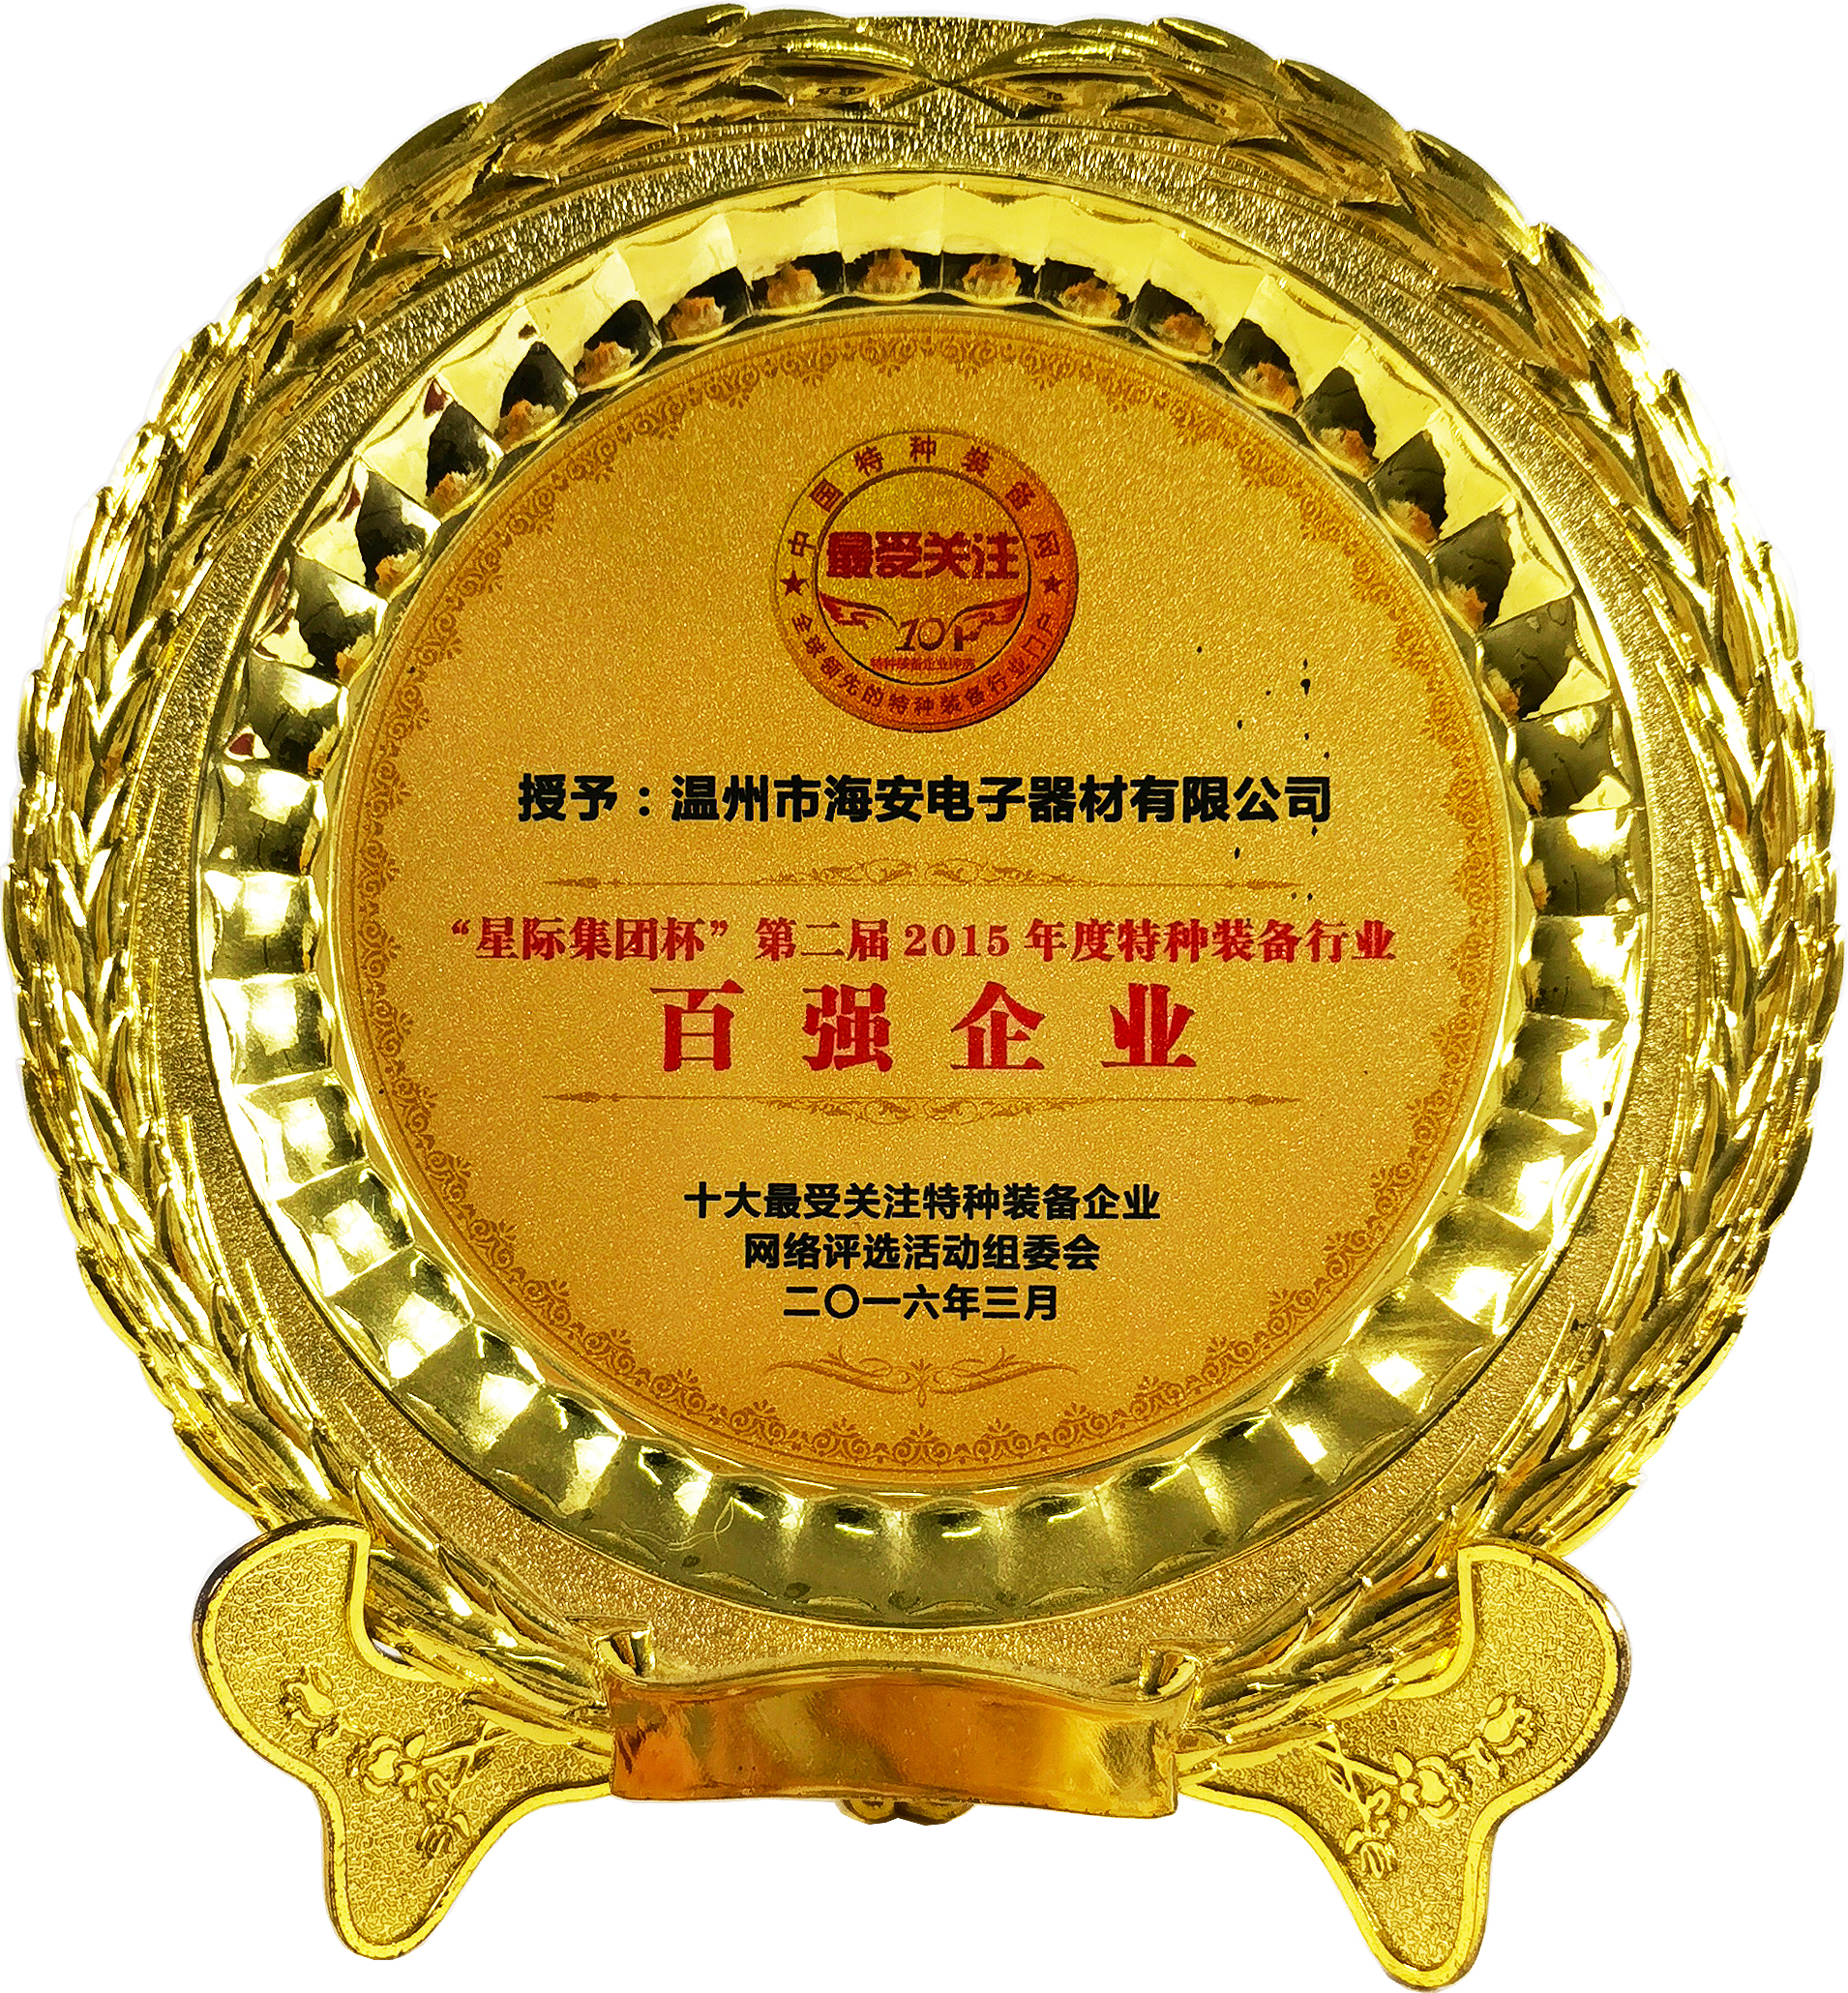 HAIBANG top 10 china police lightbar manufacturers & suppliers - Top 100 enterprises